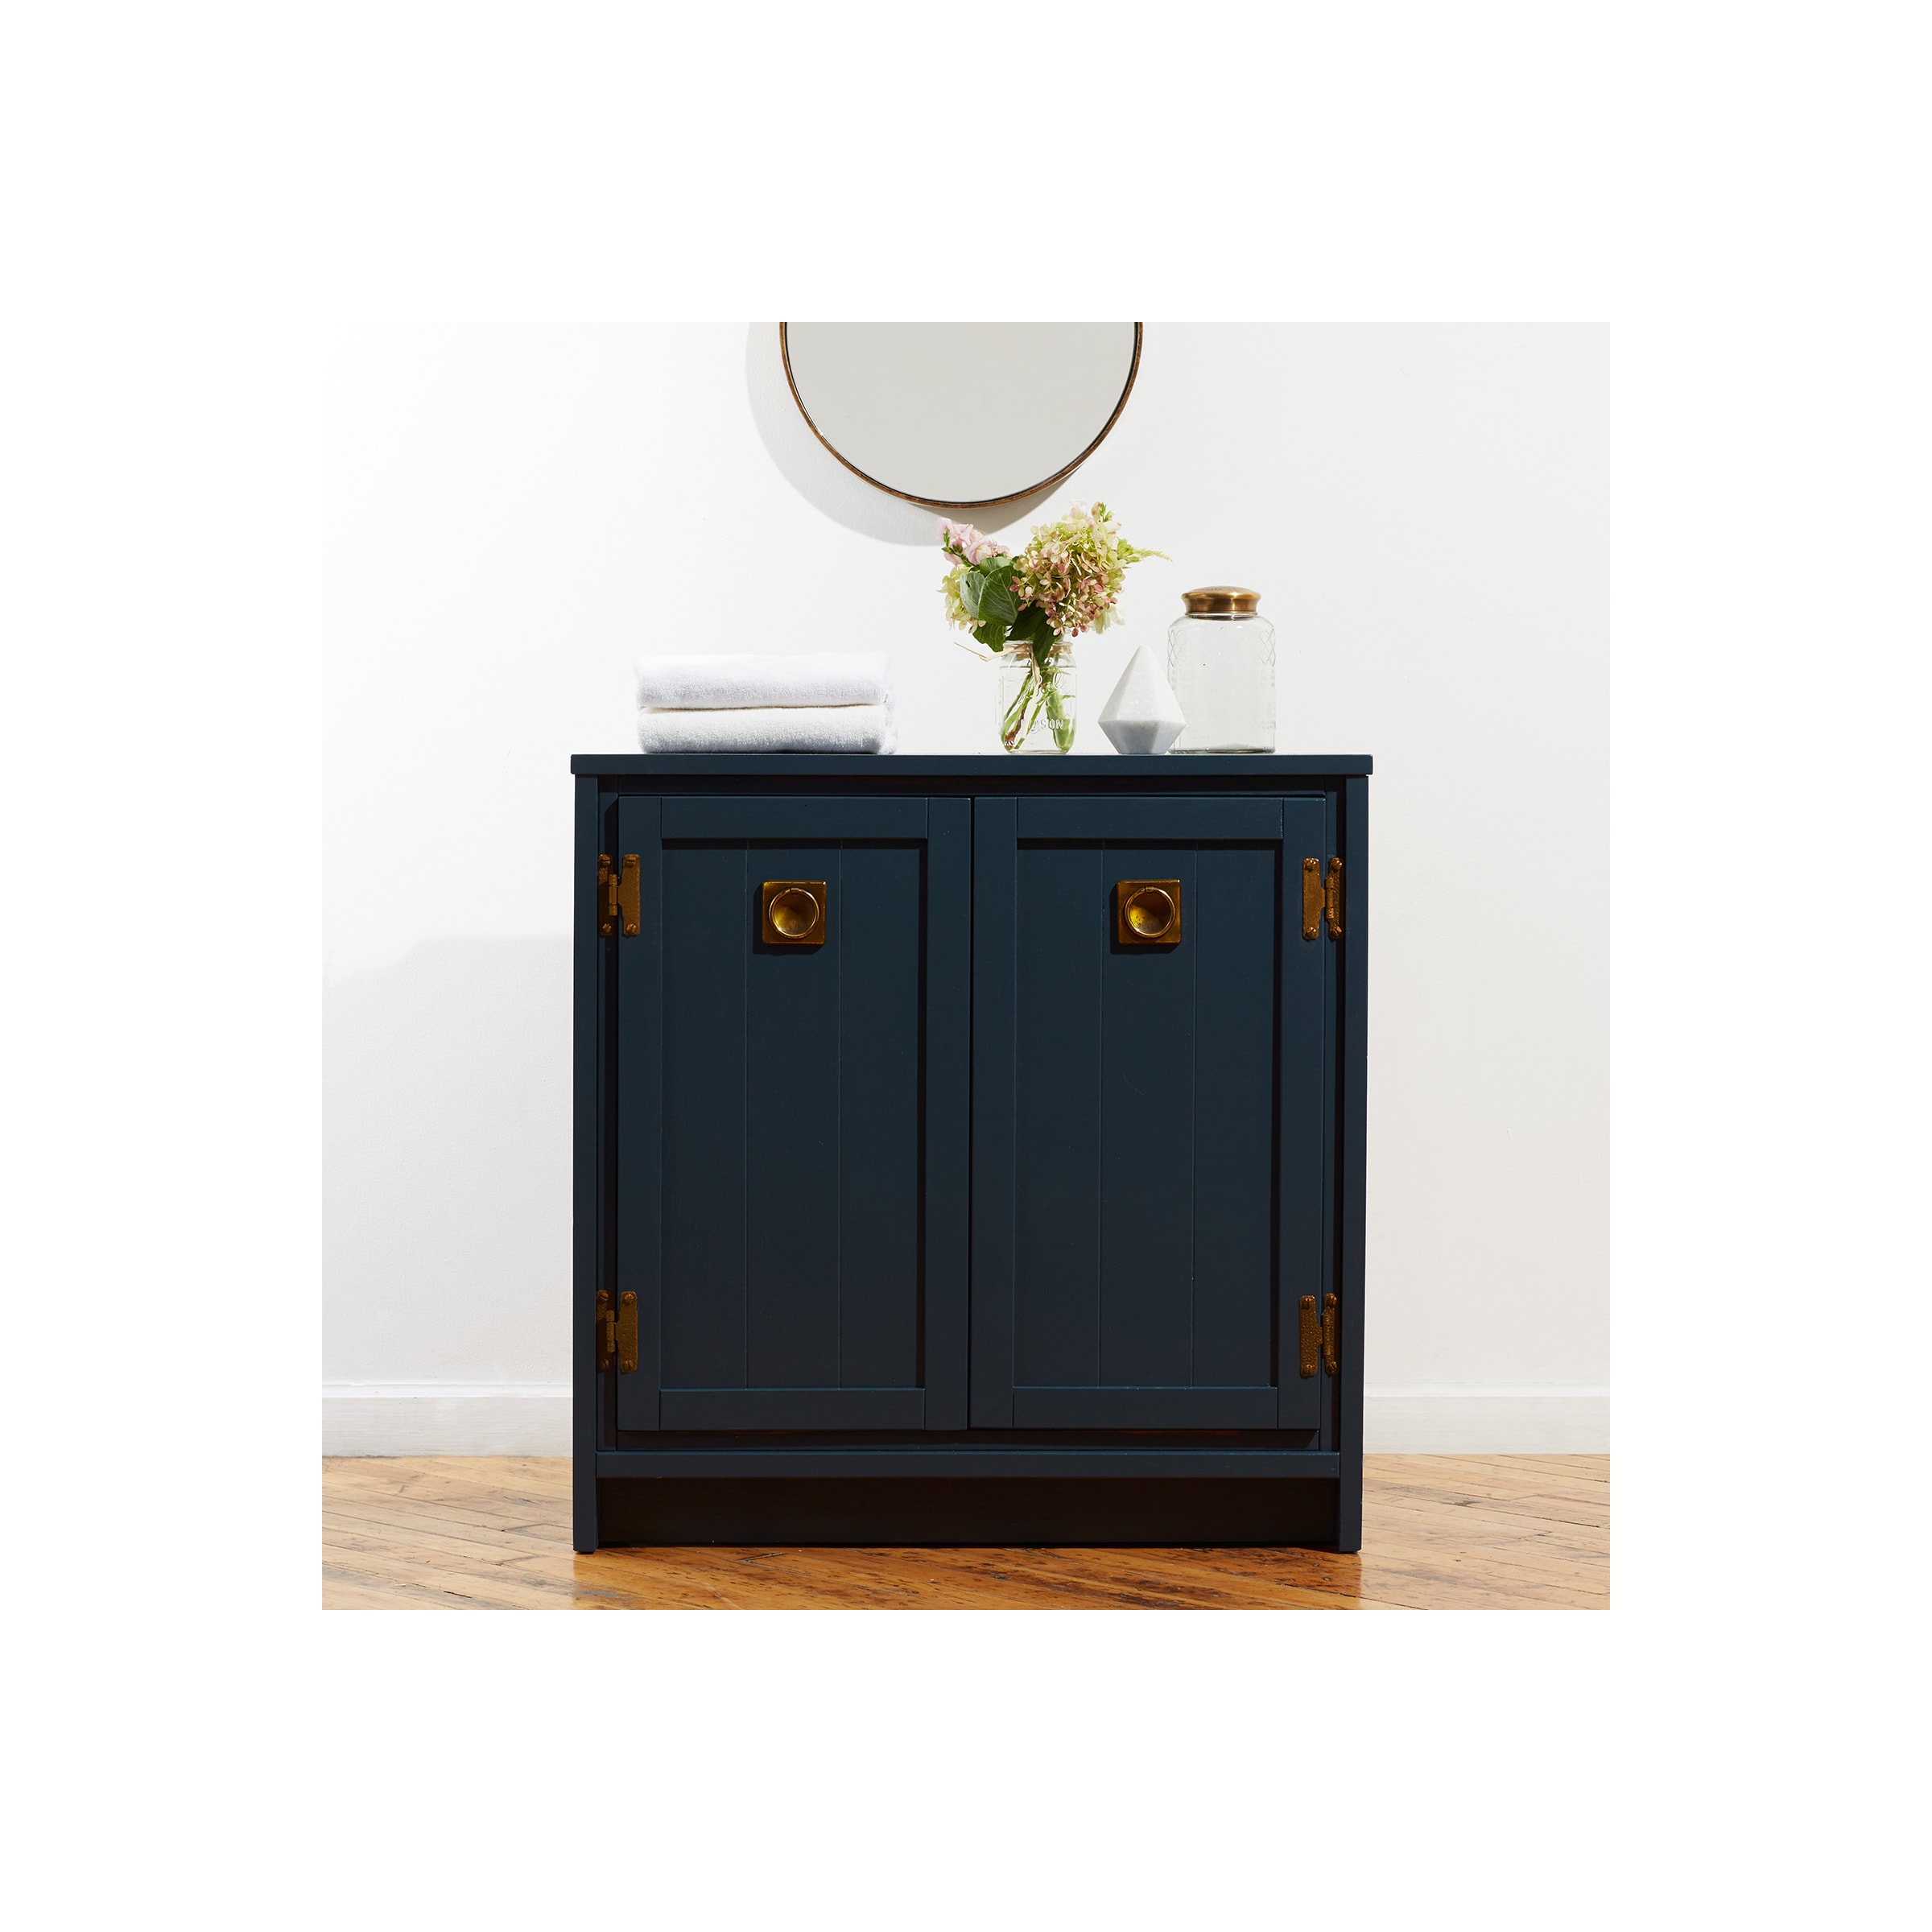 Valspar Satin Tricorn Black Hgsw1441 Cabinet and Furniture Paint Enamel  (1-quart) at